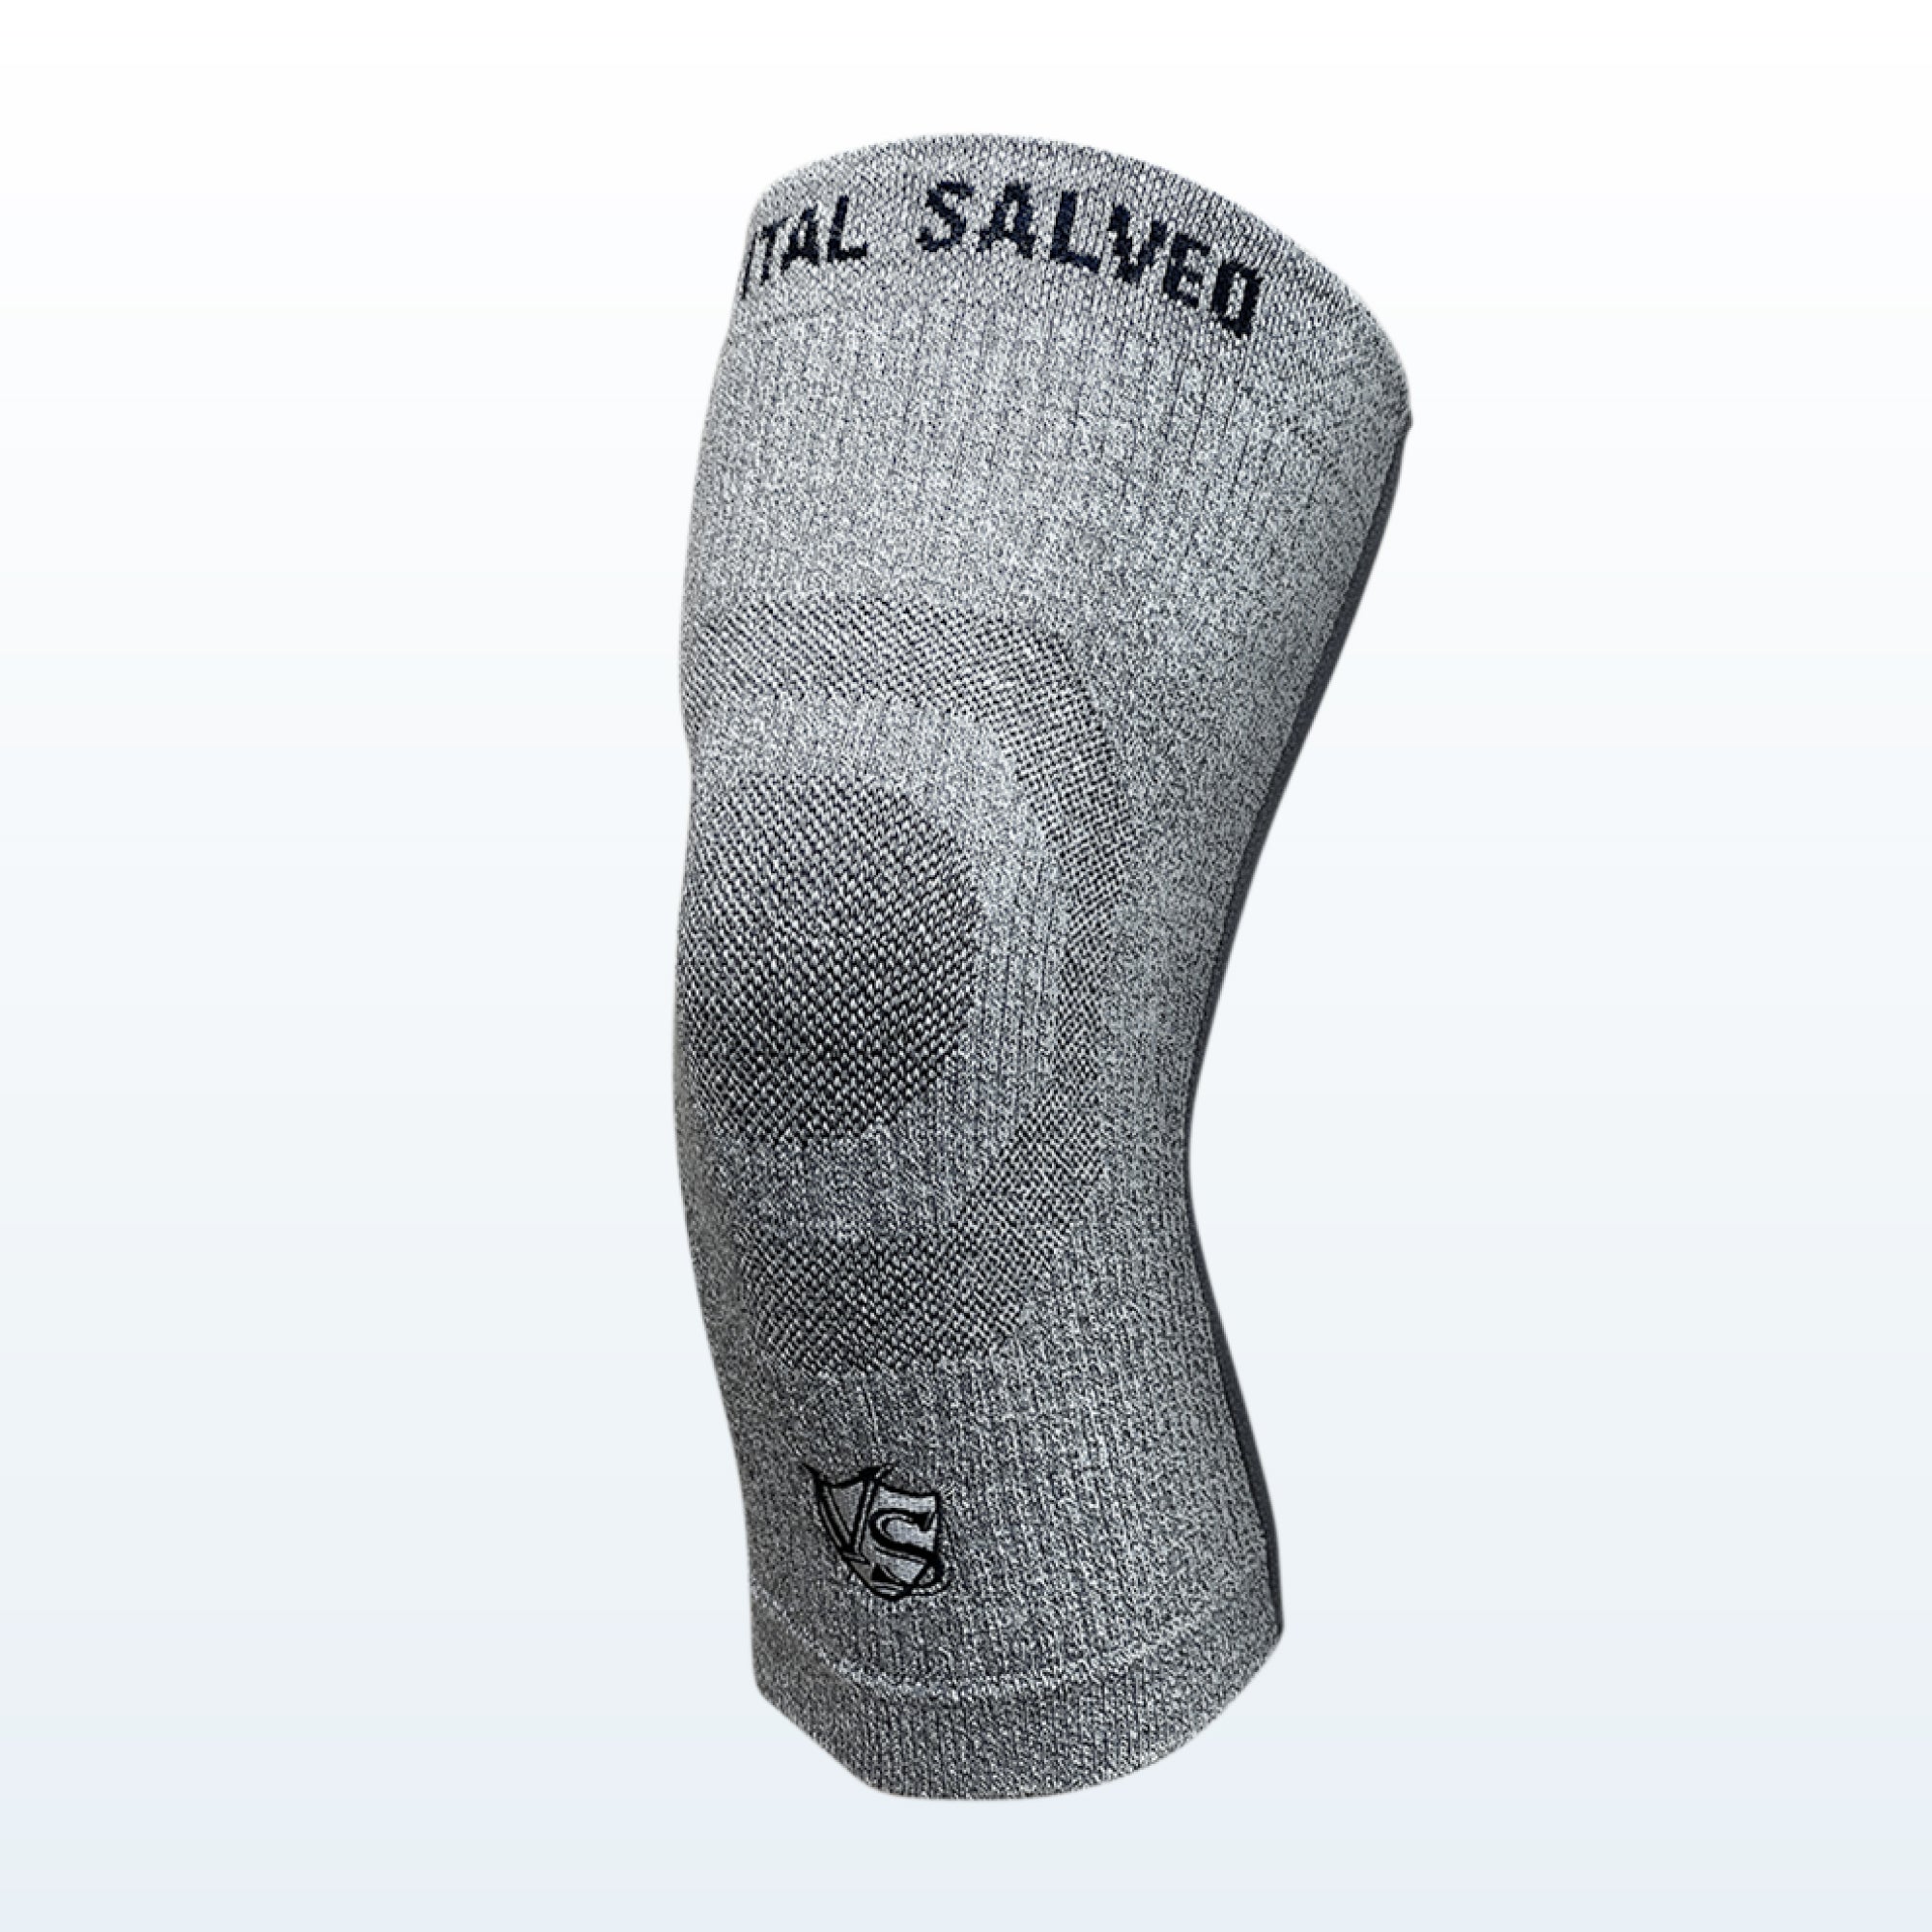 3D Knit Knee Sleeve/Brace ST3-Stay Warm - Vital Salveo